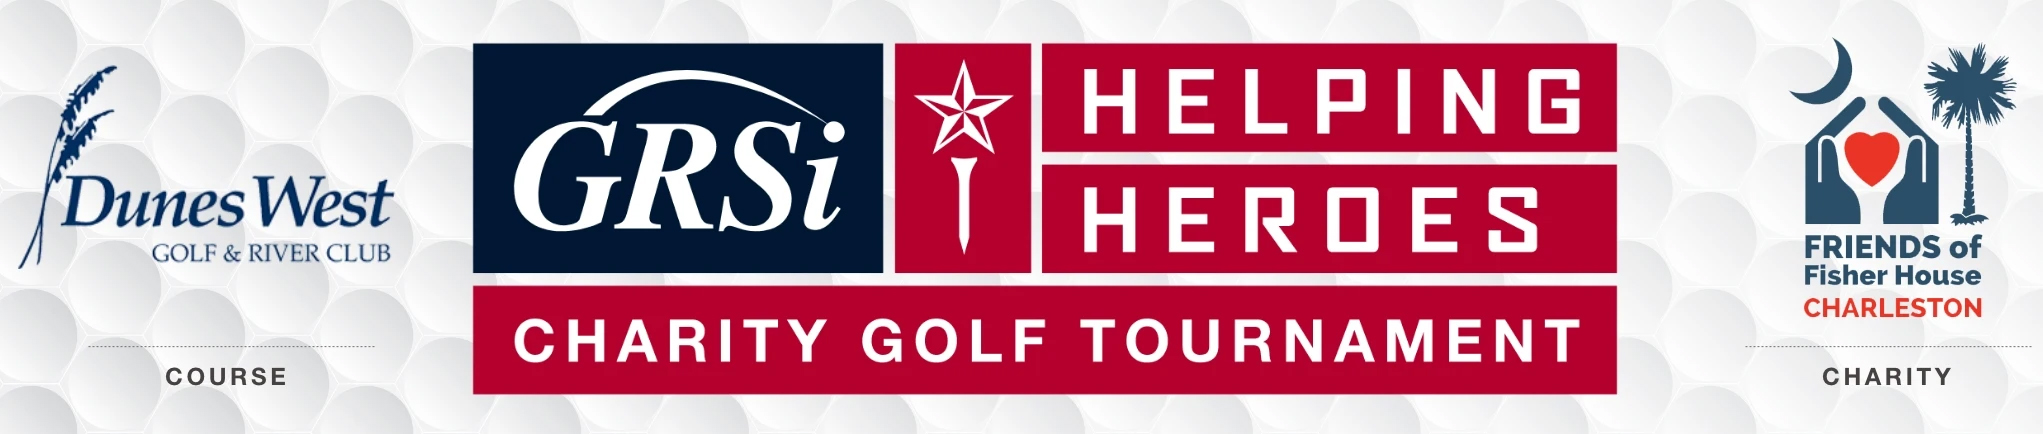 GRSI Golf Tour rnament - 91323